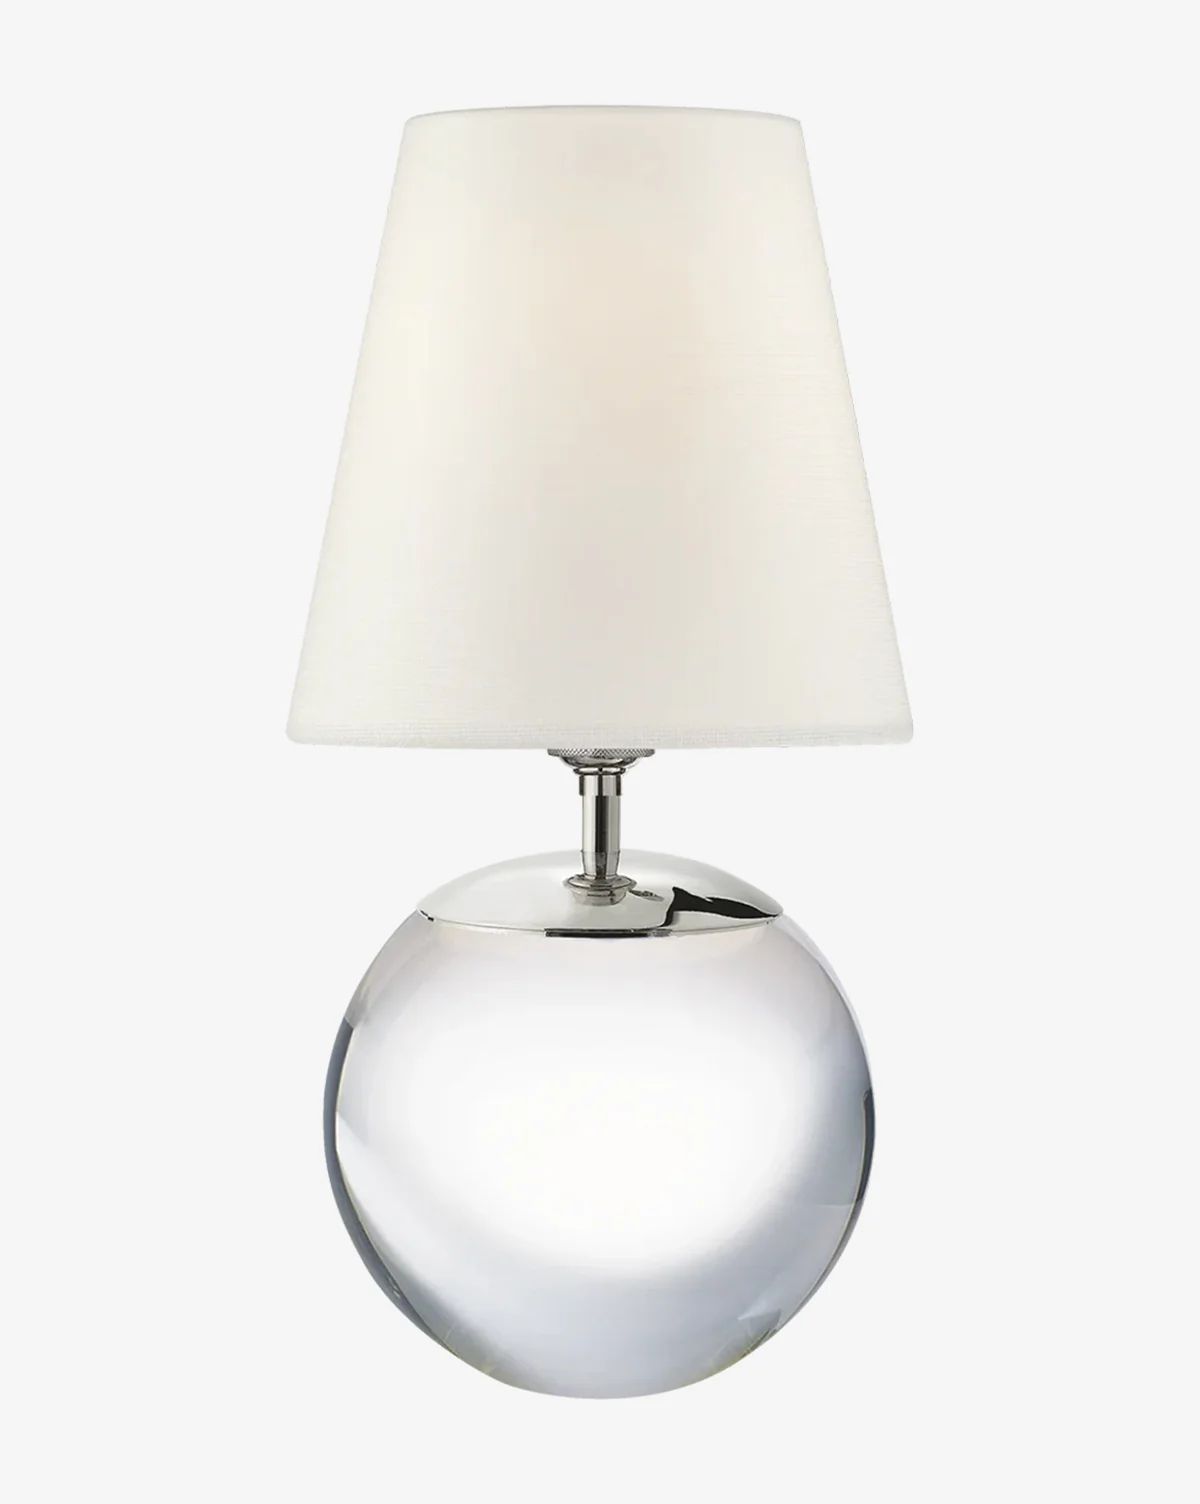 Tiny Terri Accent Lamp | McGee & Co.